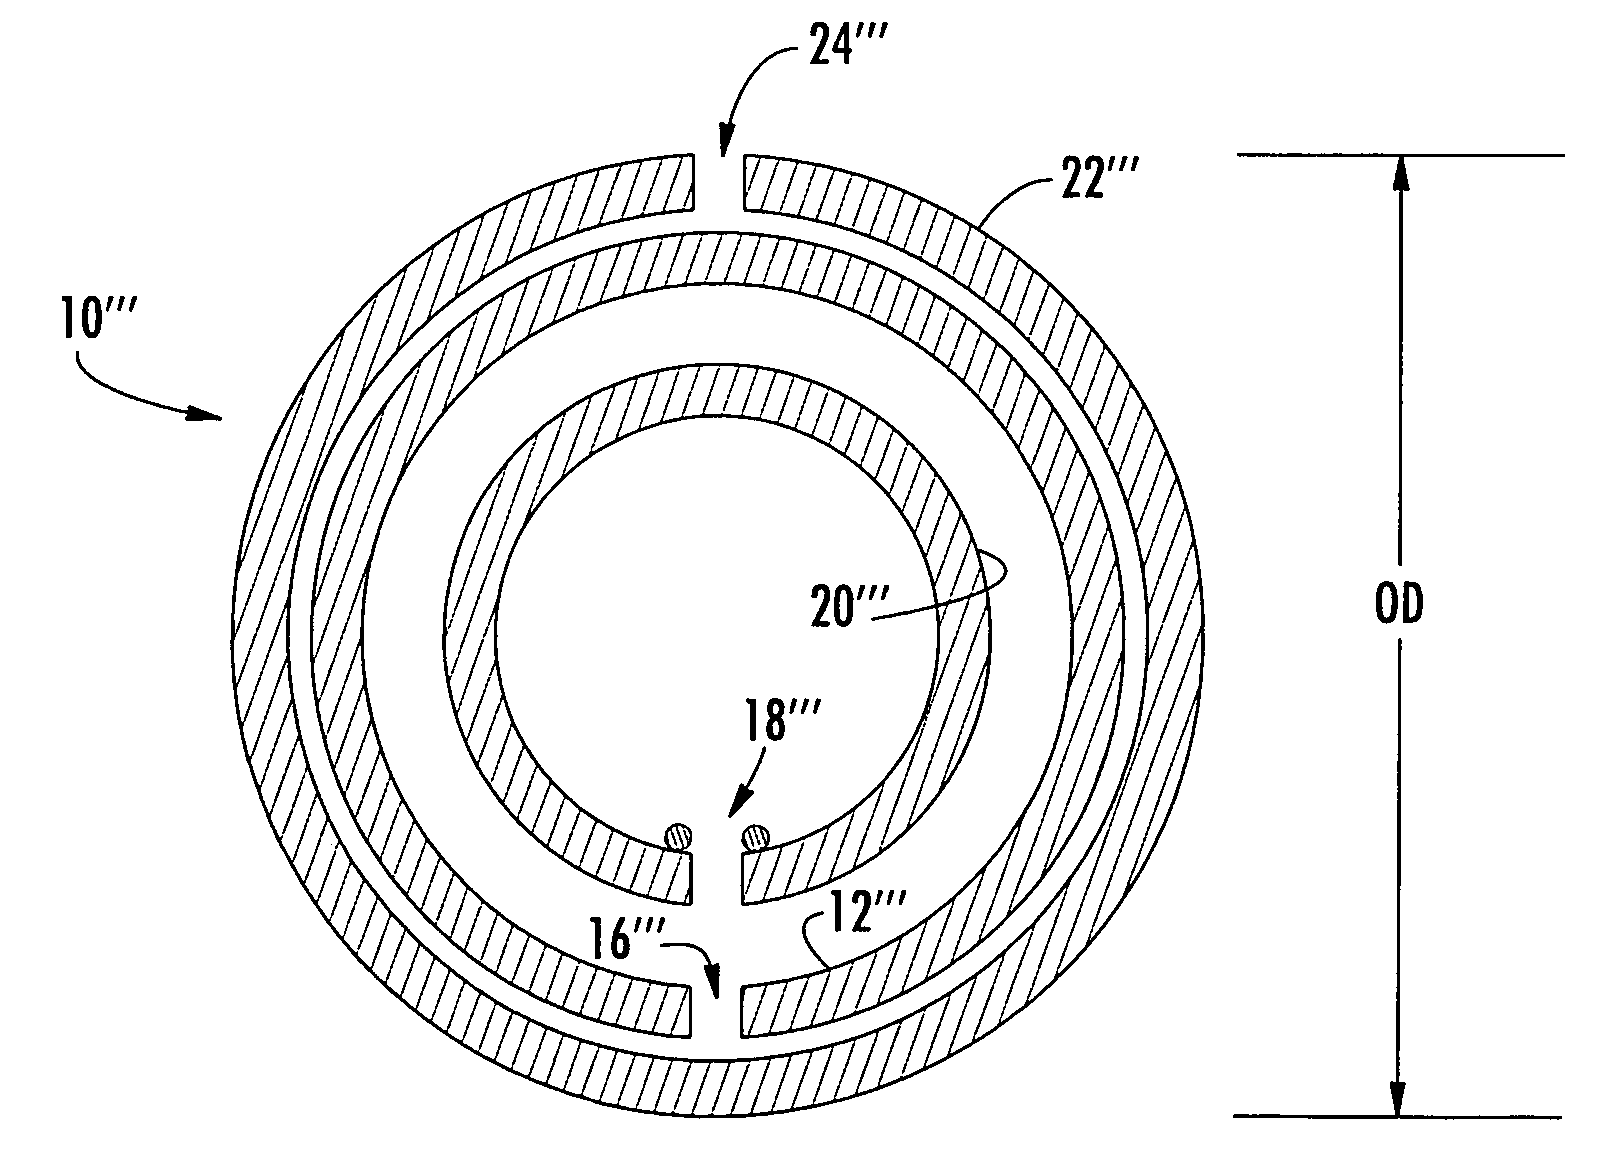 Annular ring antenna